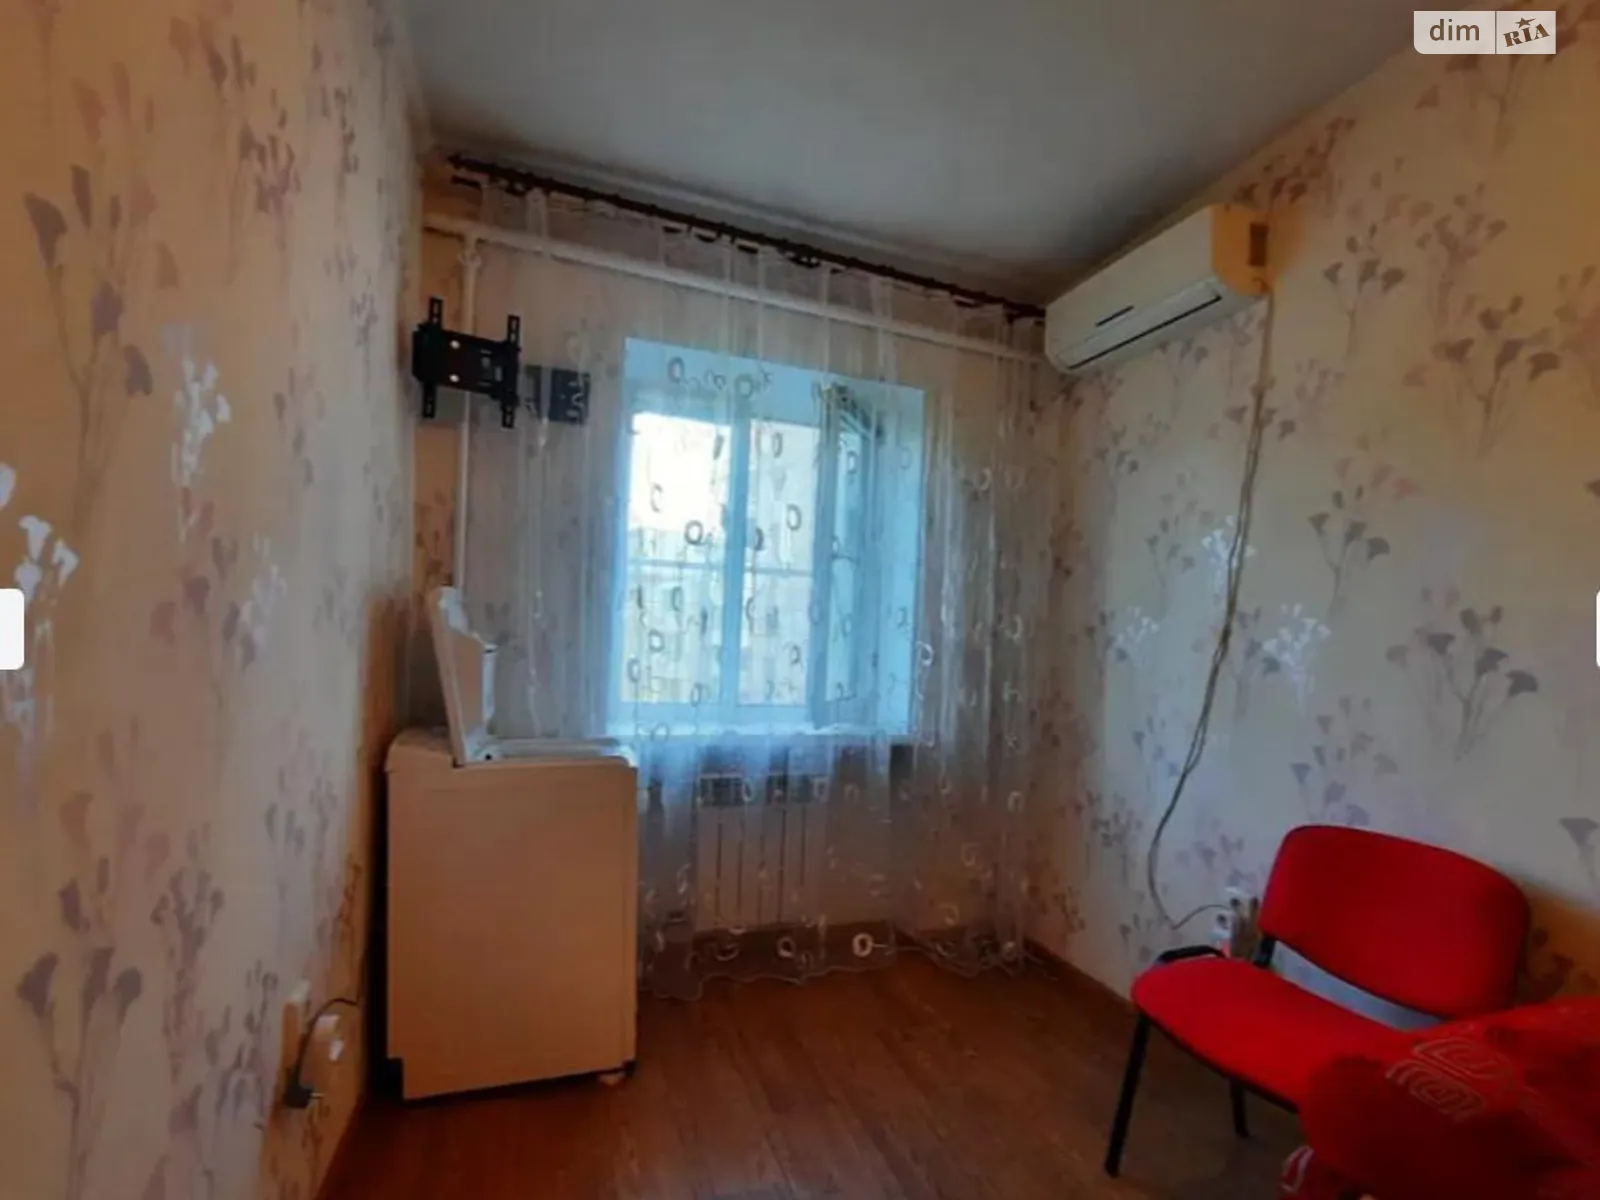 Продается комната 23 кв. м в Одессе, цена: 8000 $ - фото 1